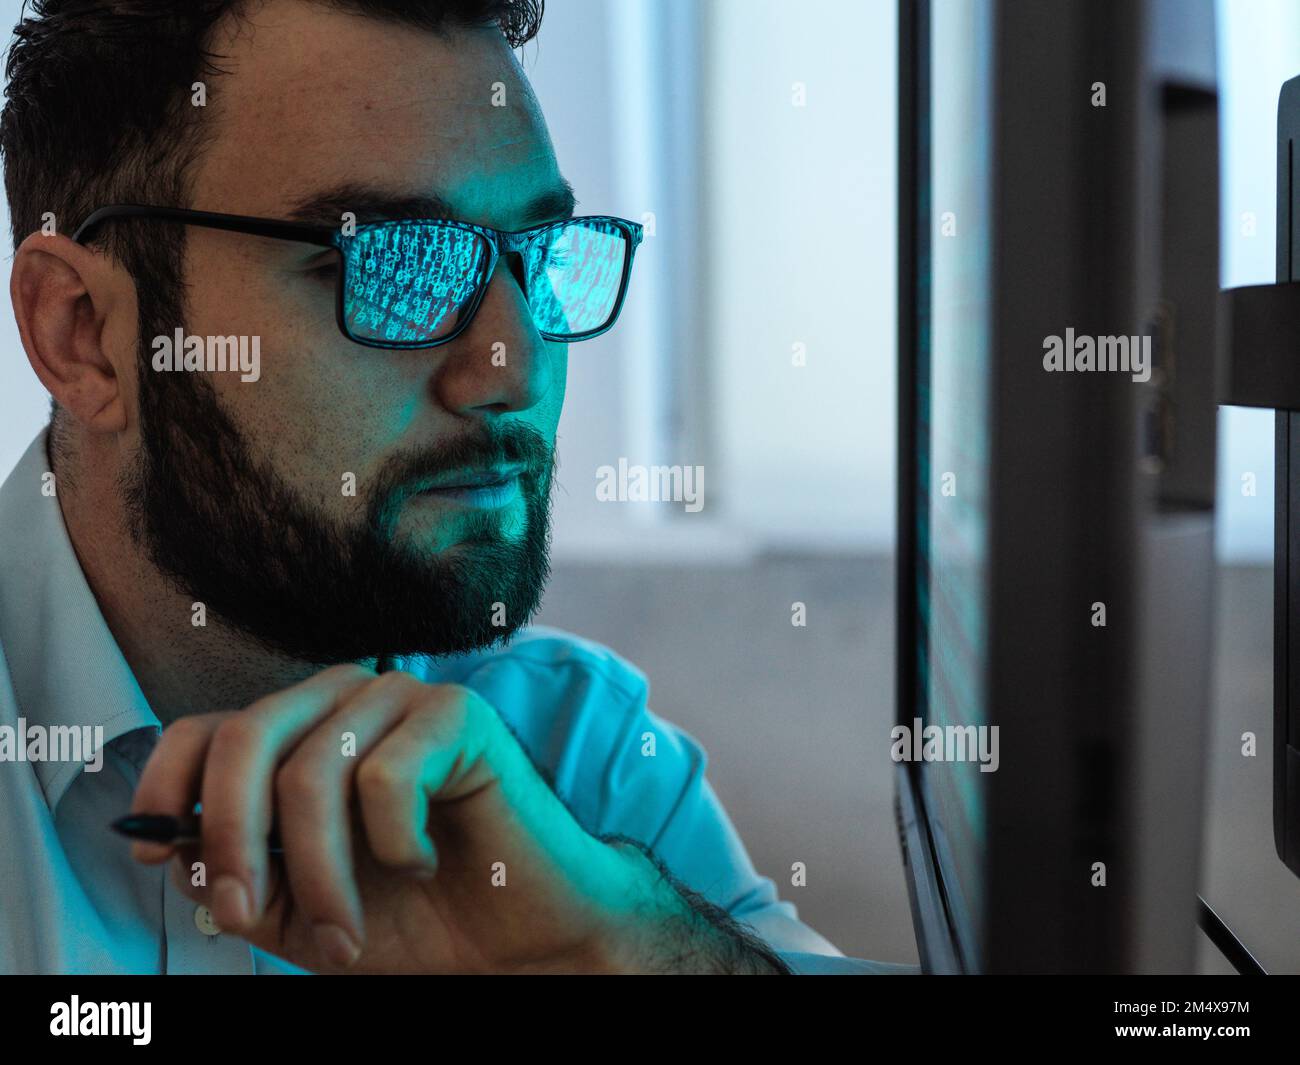 Programmer with beard hacking computer through virus Stock Photo